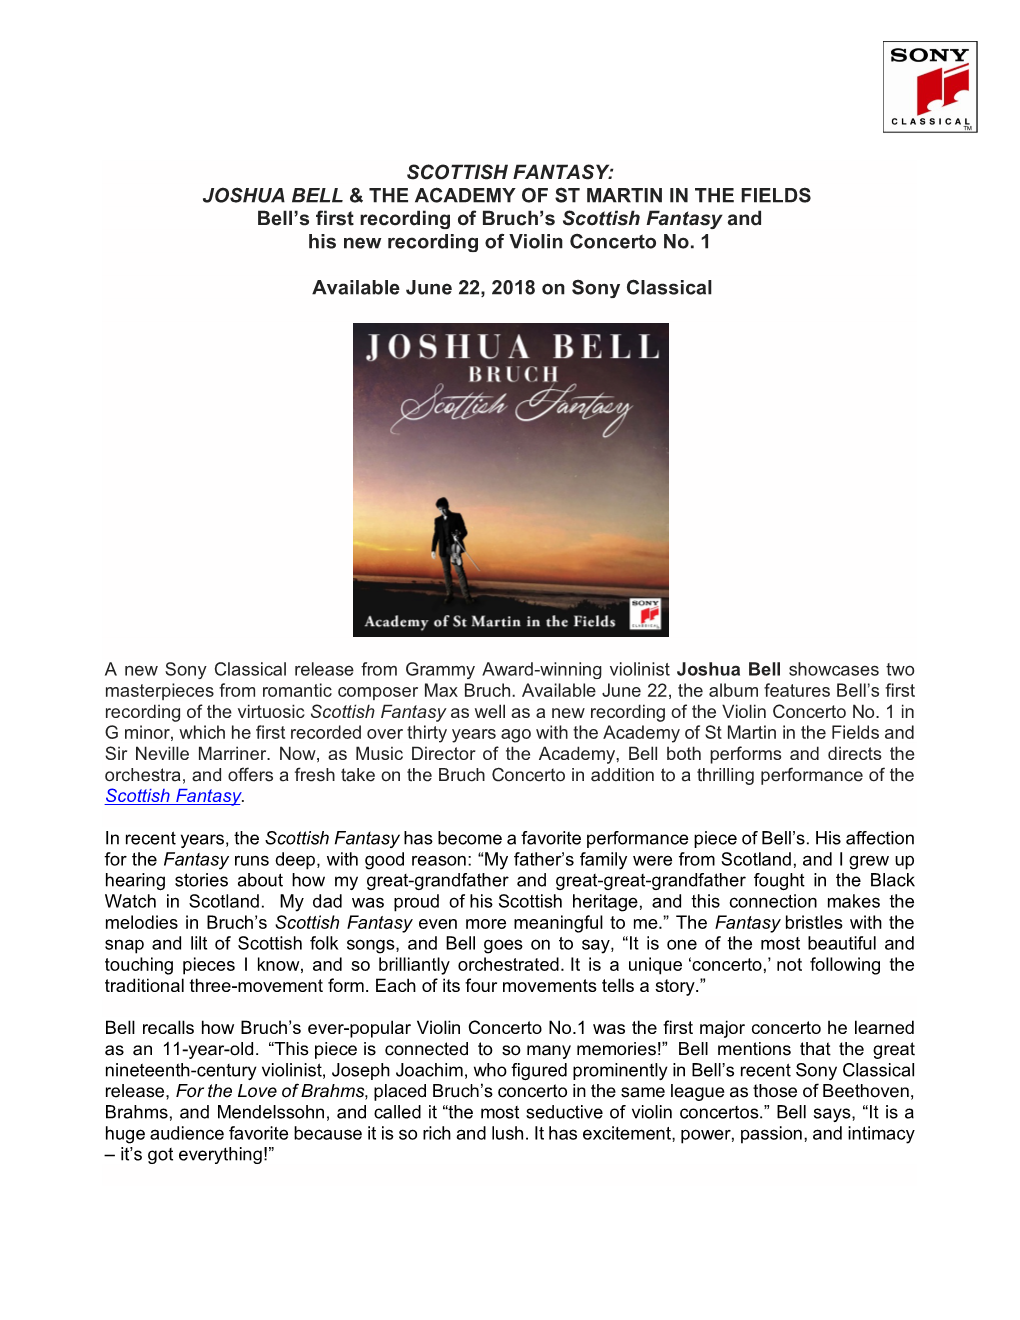 Scottish Fantasy: Joshua Bell & the Academy of St Martin